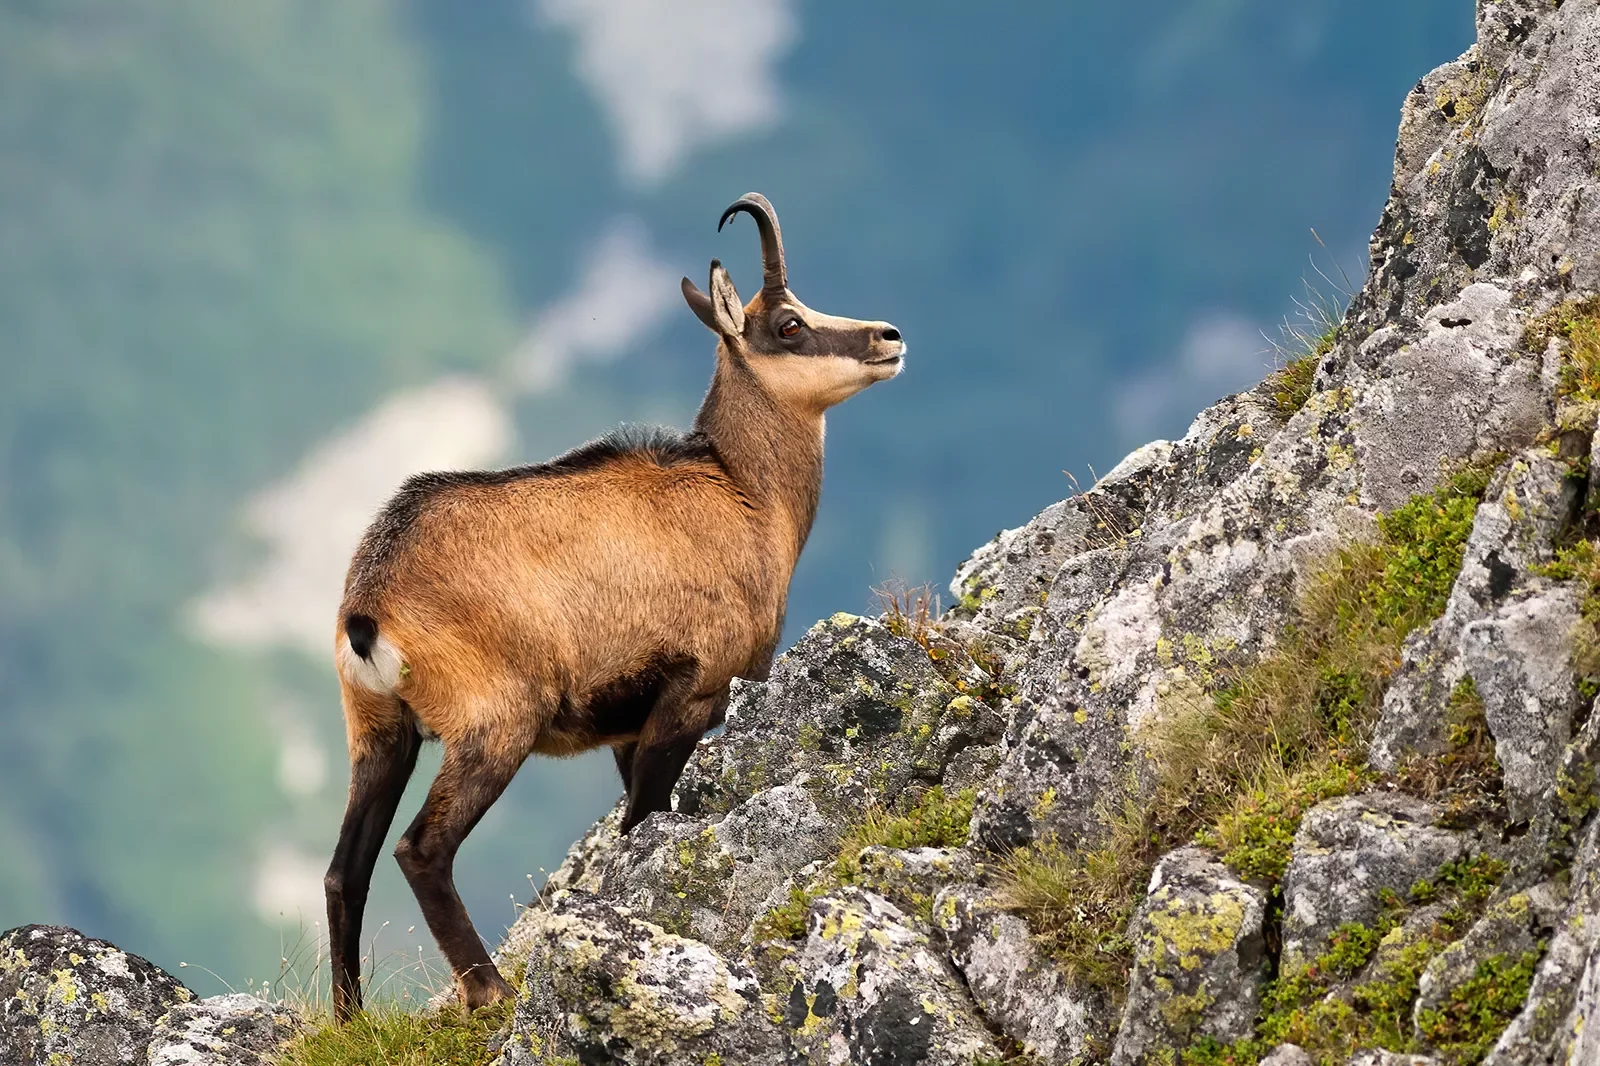 Wild mountain goat on rocky cliff.